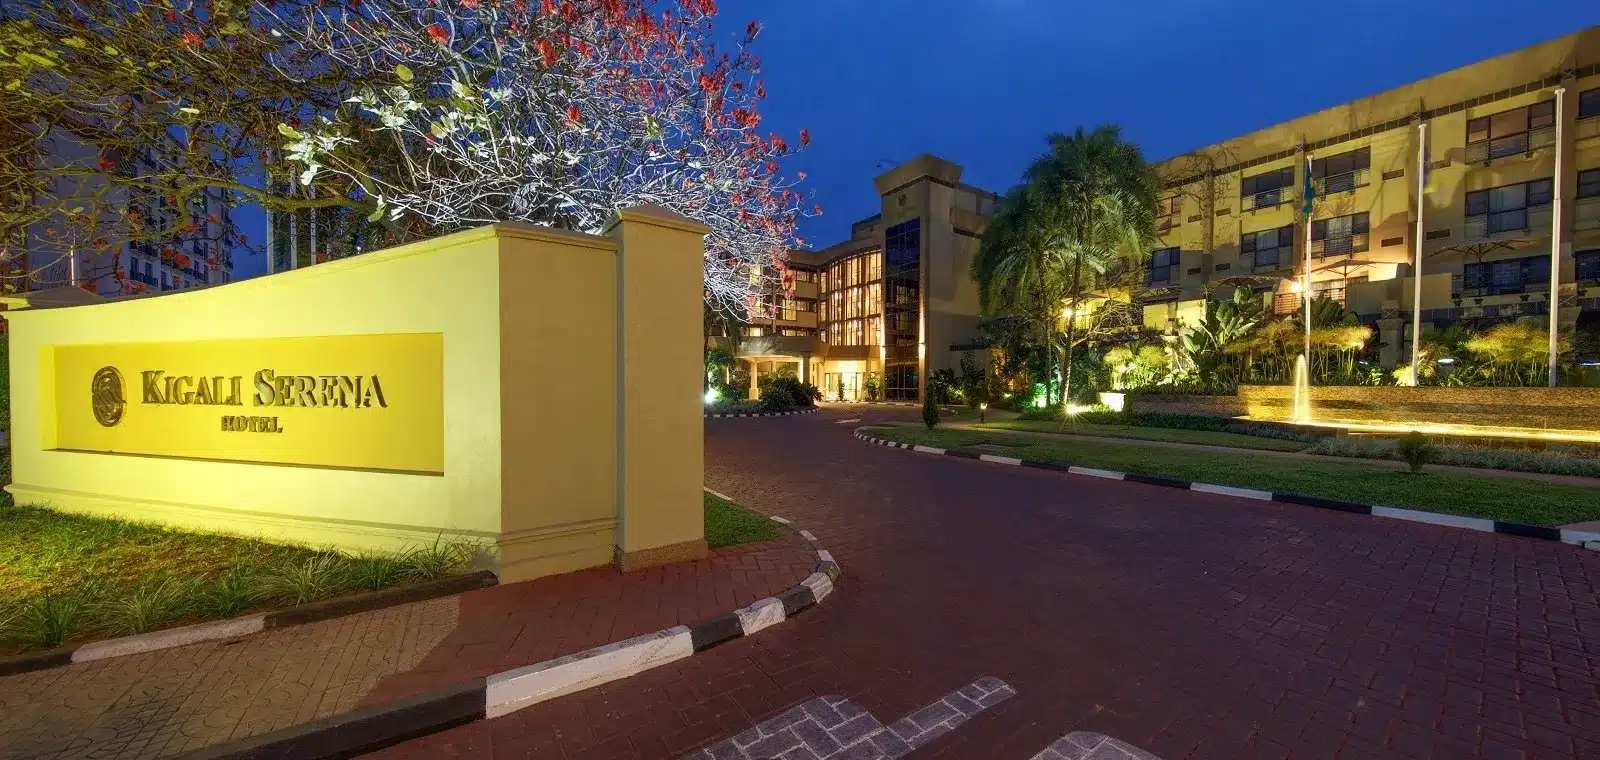 6 Kigali Serena Hotel